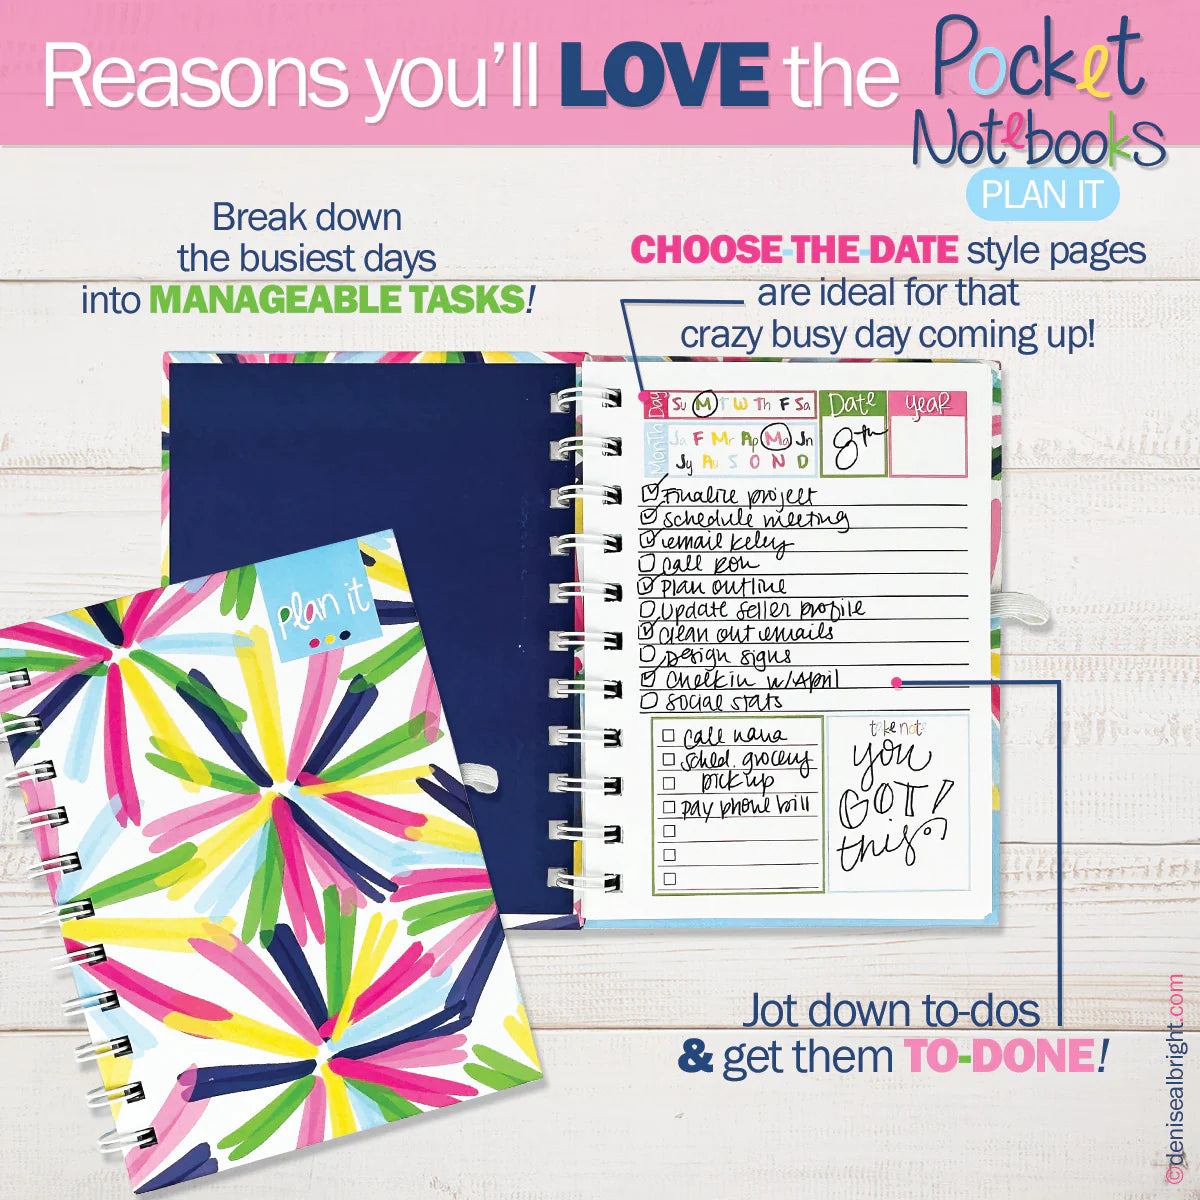 Plan It! Pocket Notebooks